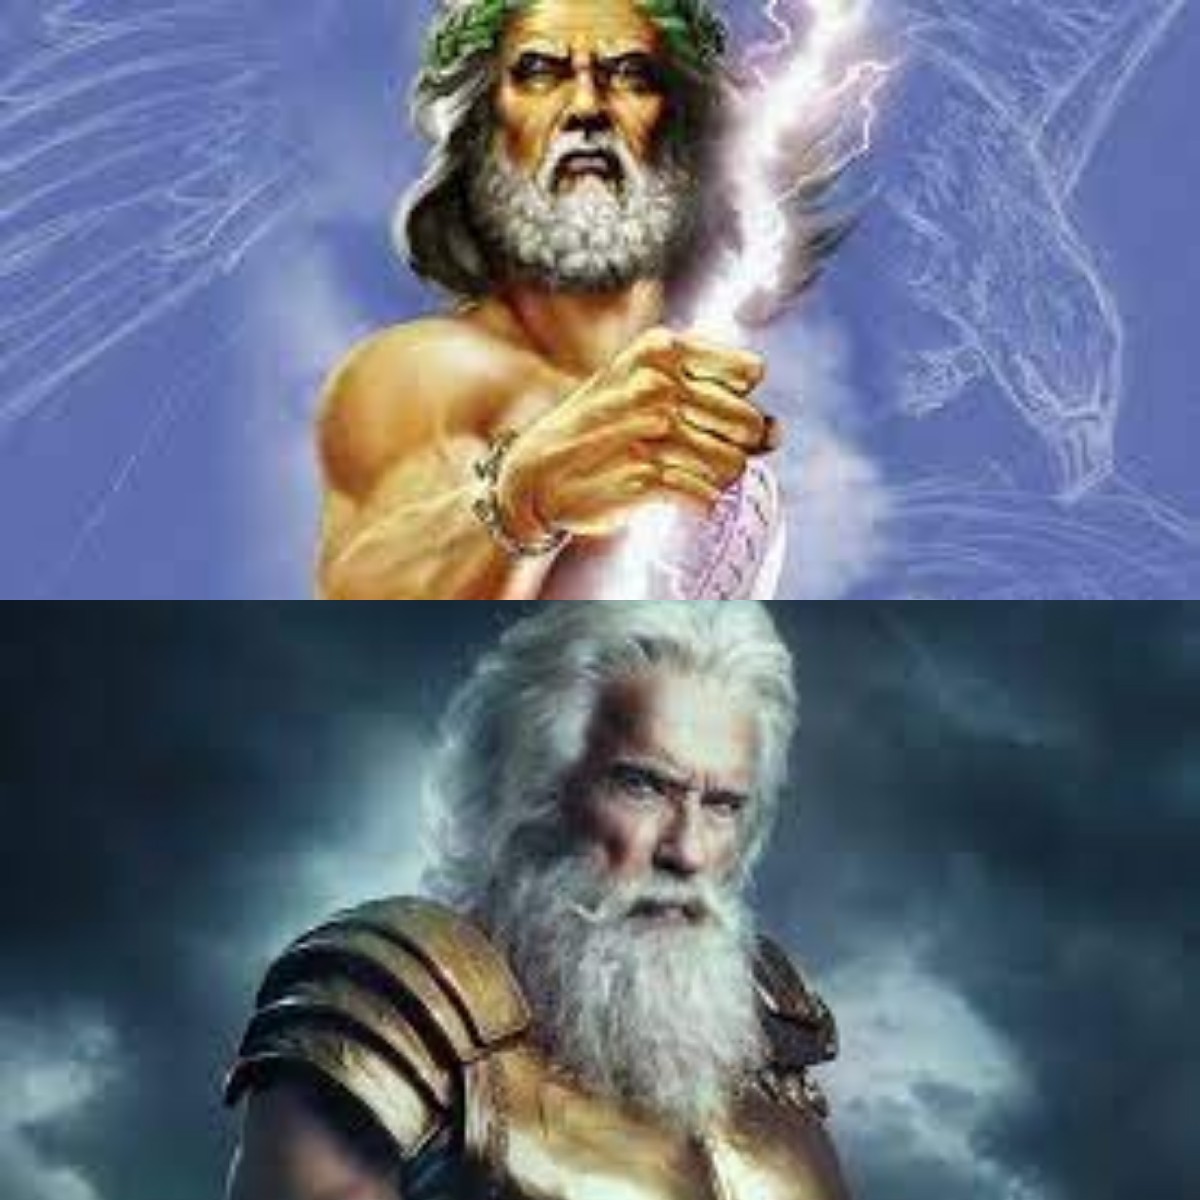 Mengenal Sosok Zeus Sang Raja Terkuat Penguasa Para Dewa Yunani Kuno